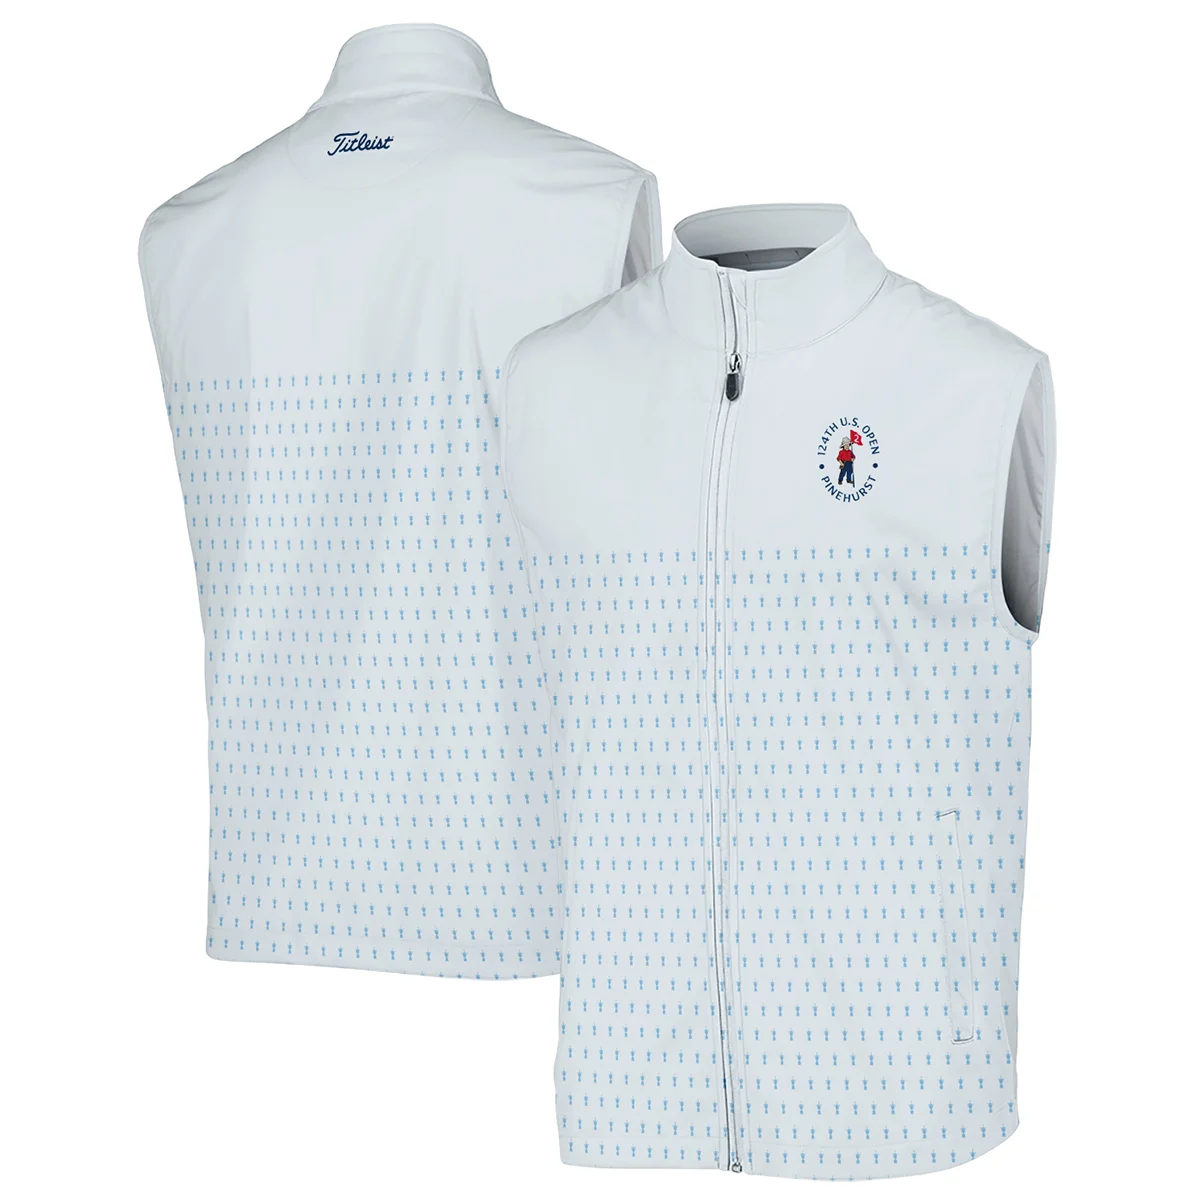 U.S Open Trophy Pattern Light Blue 124th U.S. Open Pinehurst Titleist Vneck Polo Shirt Style Classic Polo Shirt For Men